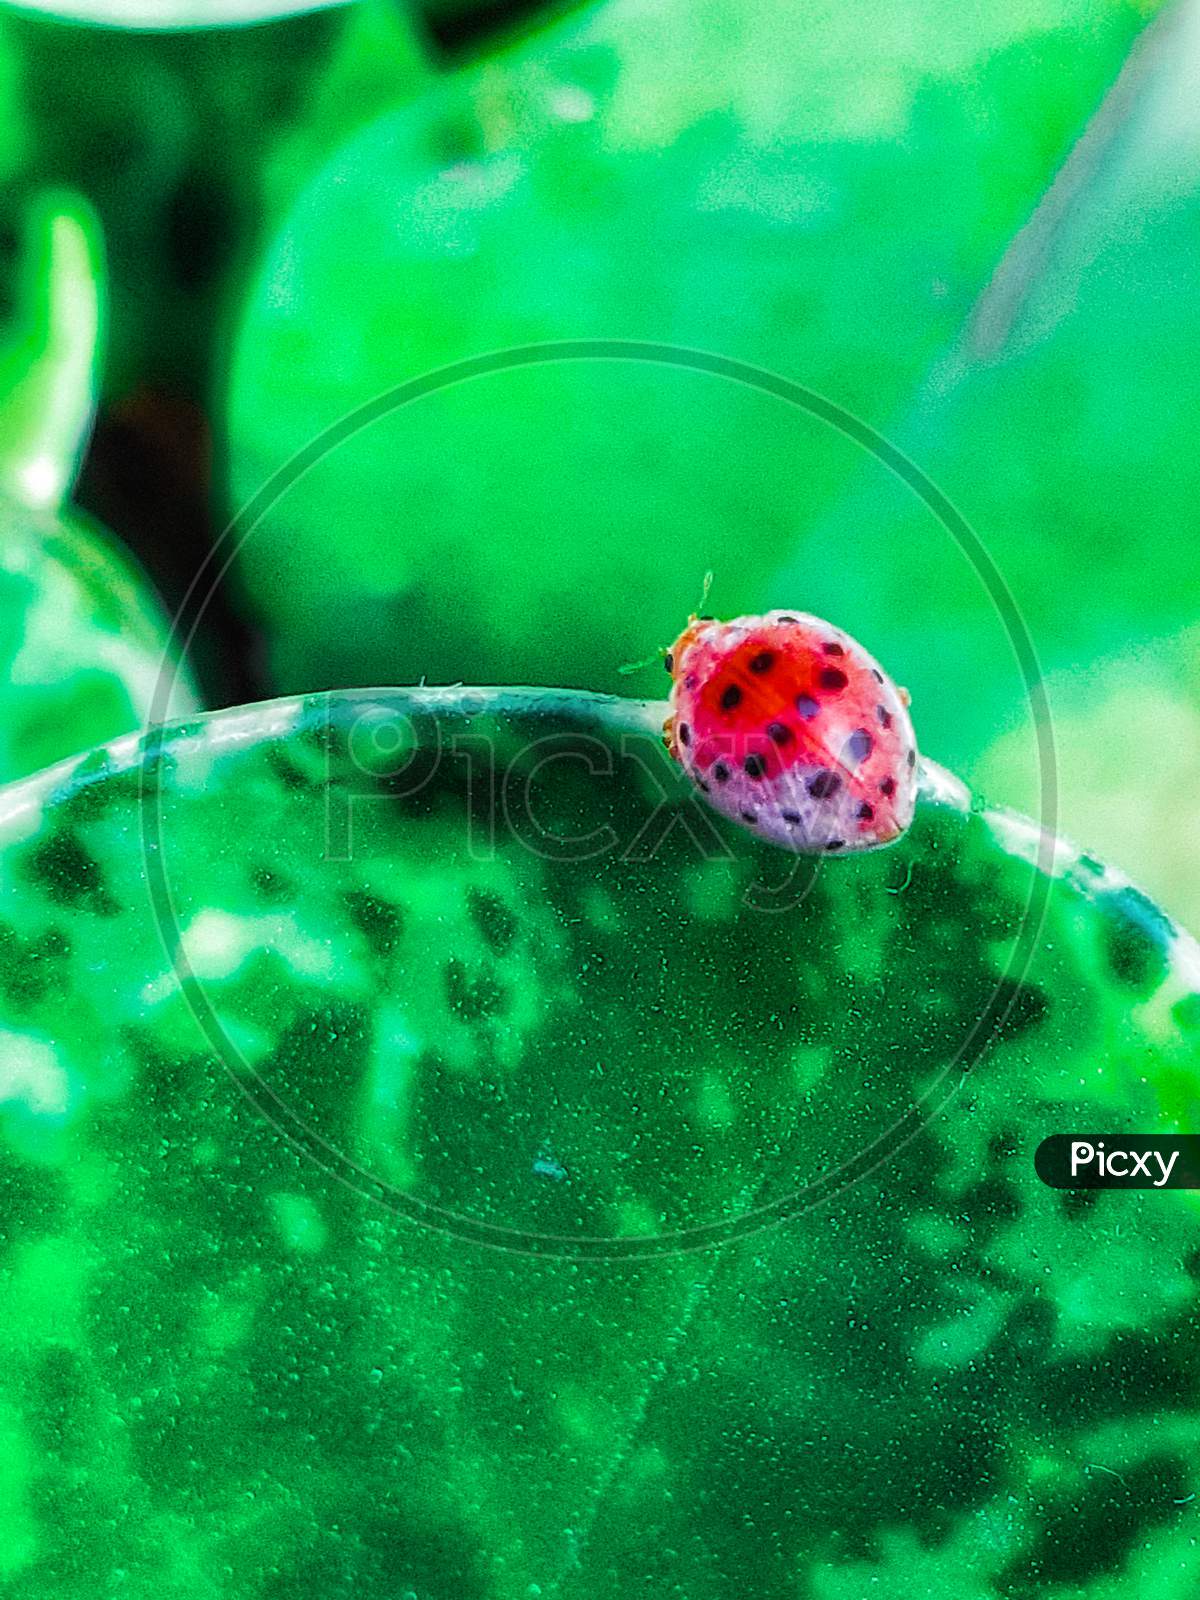 A ladybug in the leaf